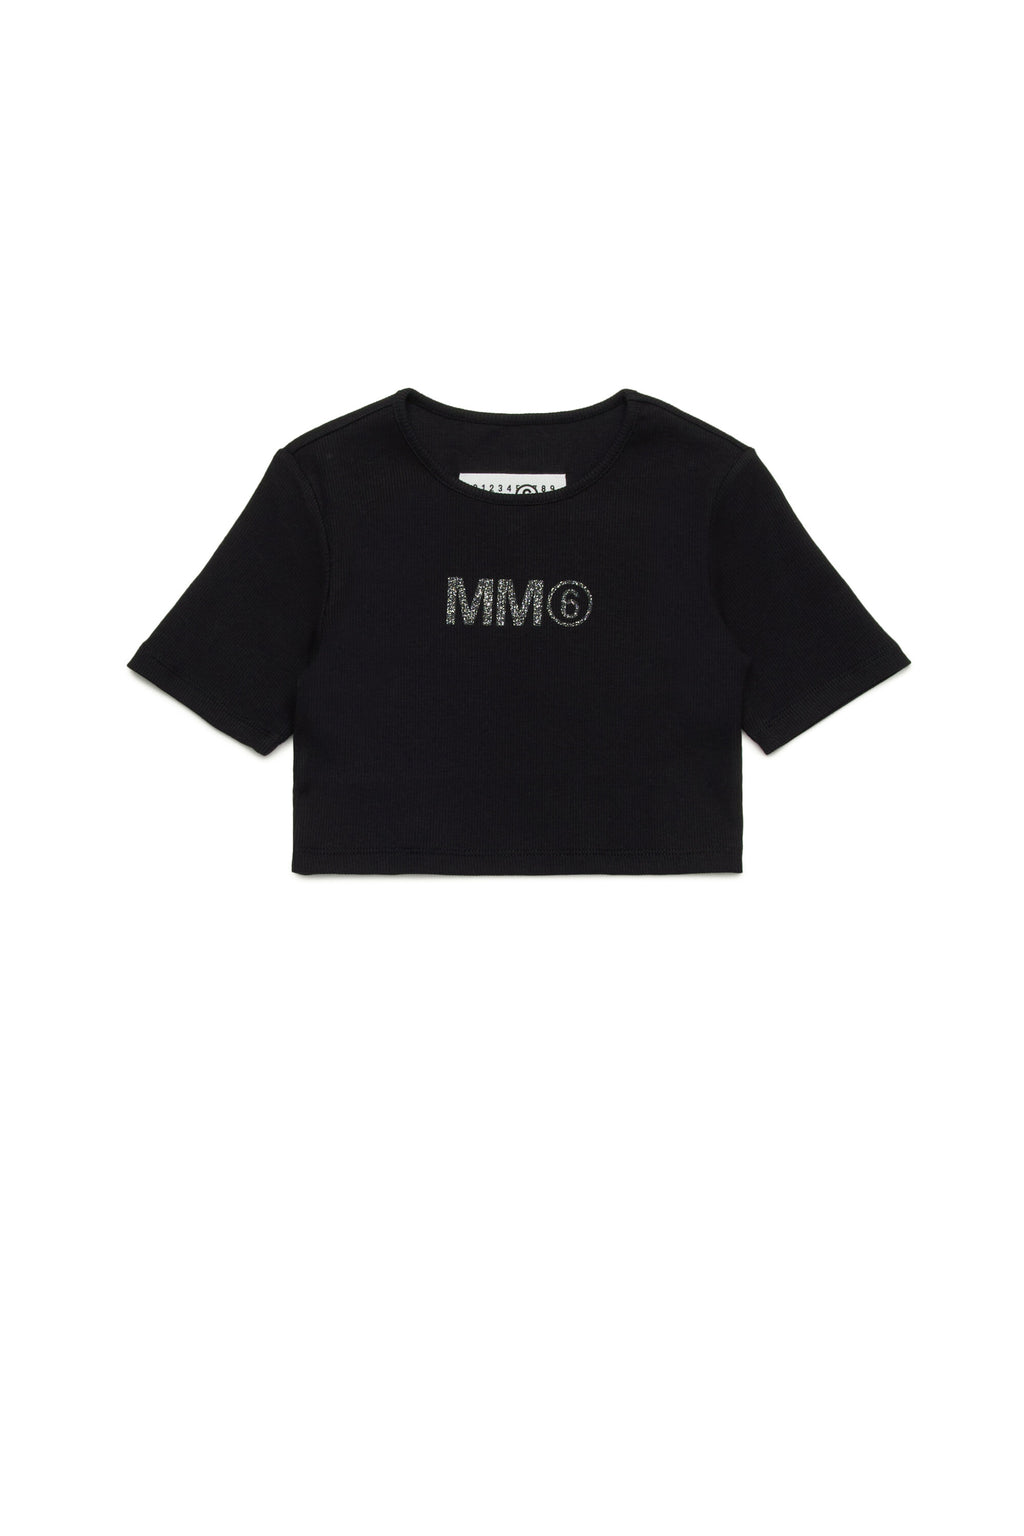 MM6グリッターロゴ入りリブ編みTシャツ